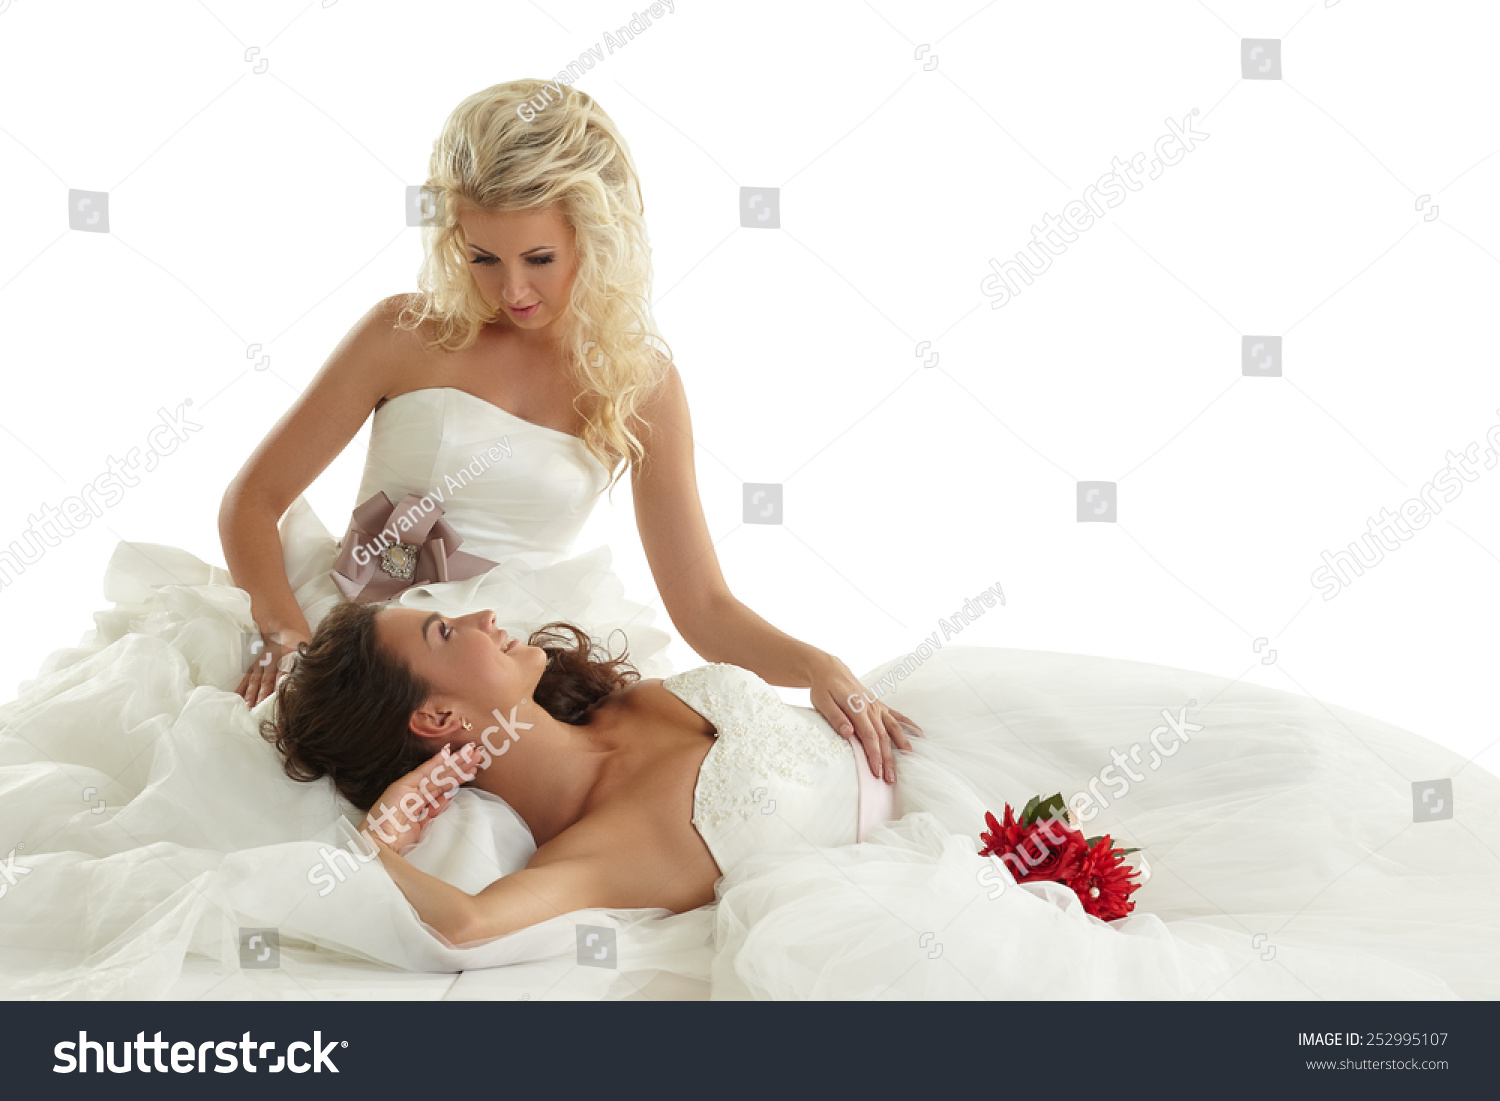 Russian Brides Concept Russian 13